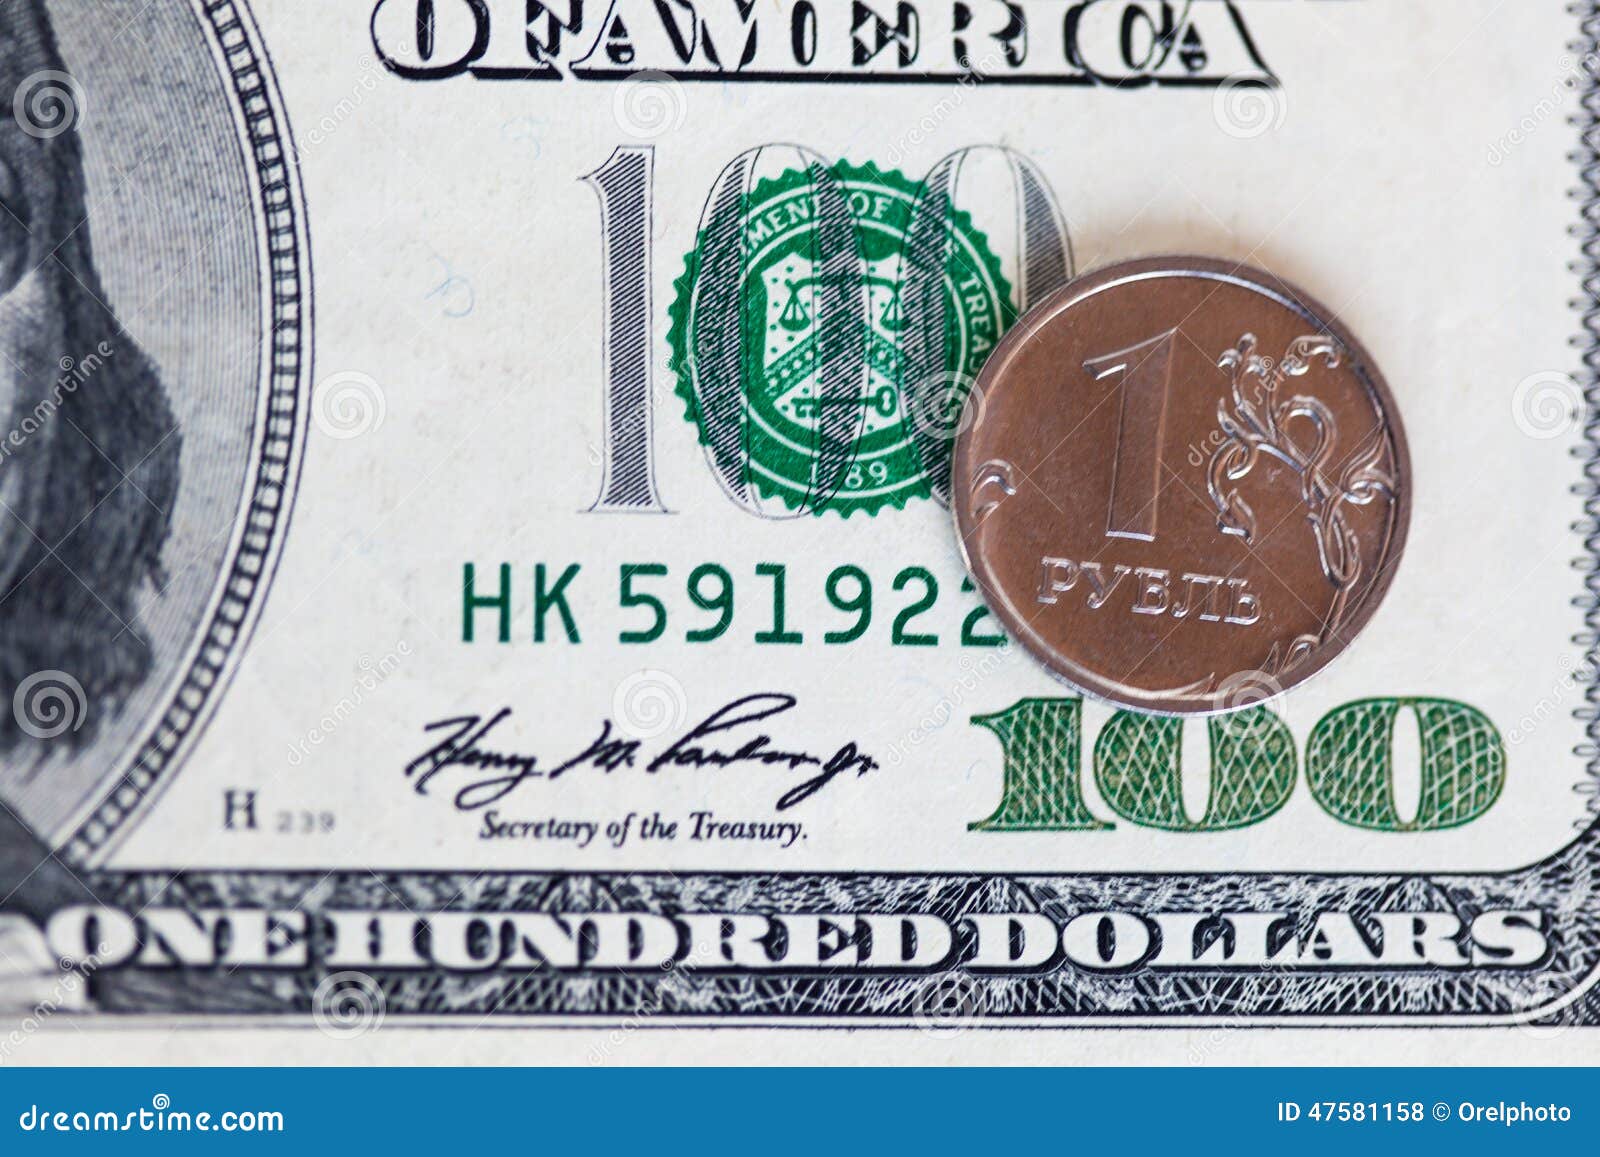 American 100 Dollar Bill And 1 Russian Rubble Stock Photo Image